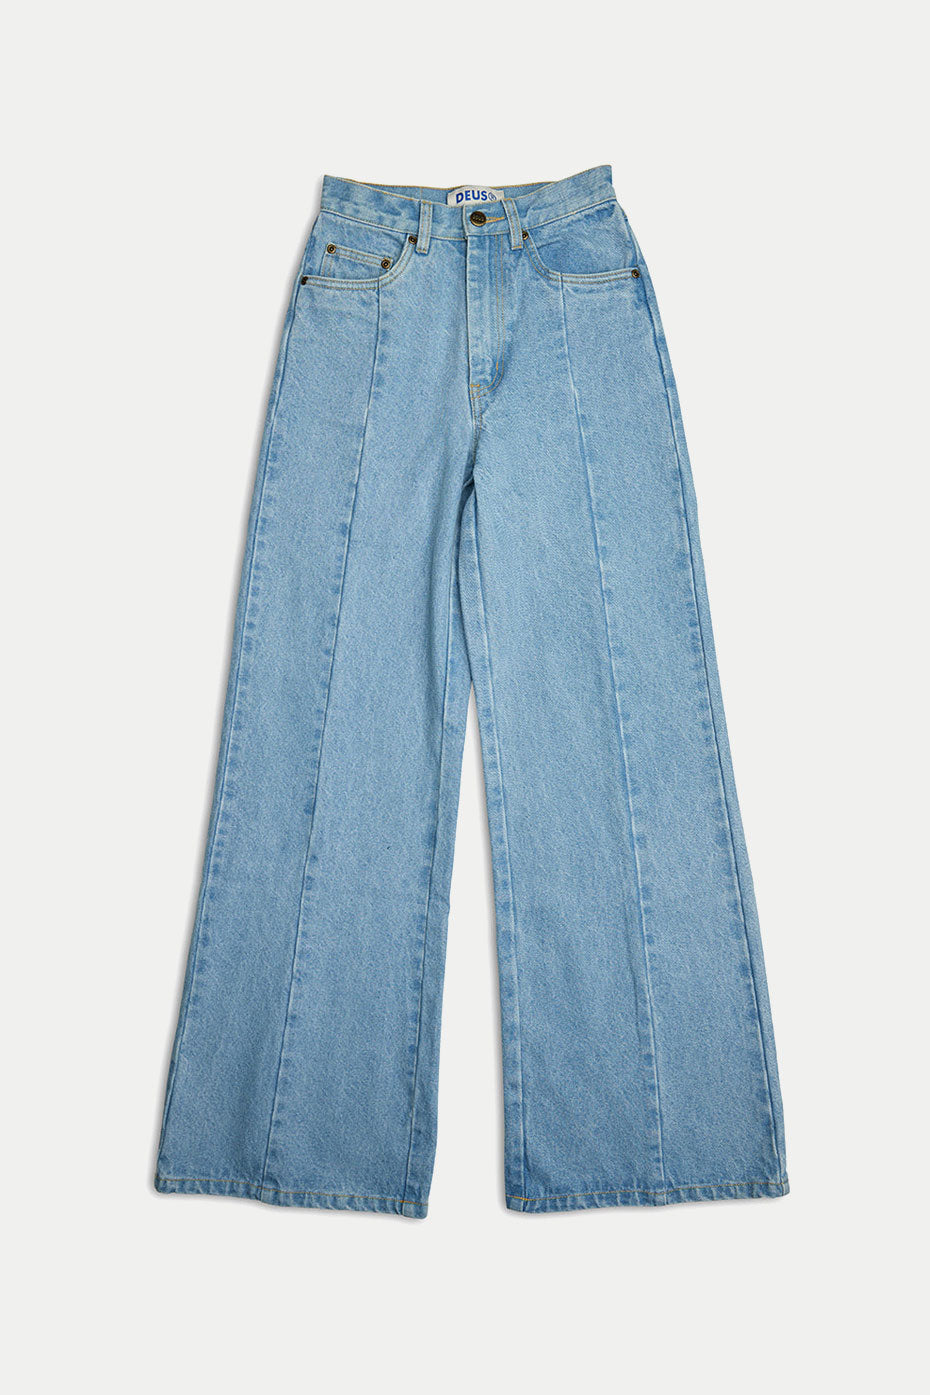 Stonewash Indigo Jiro Jeans